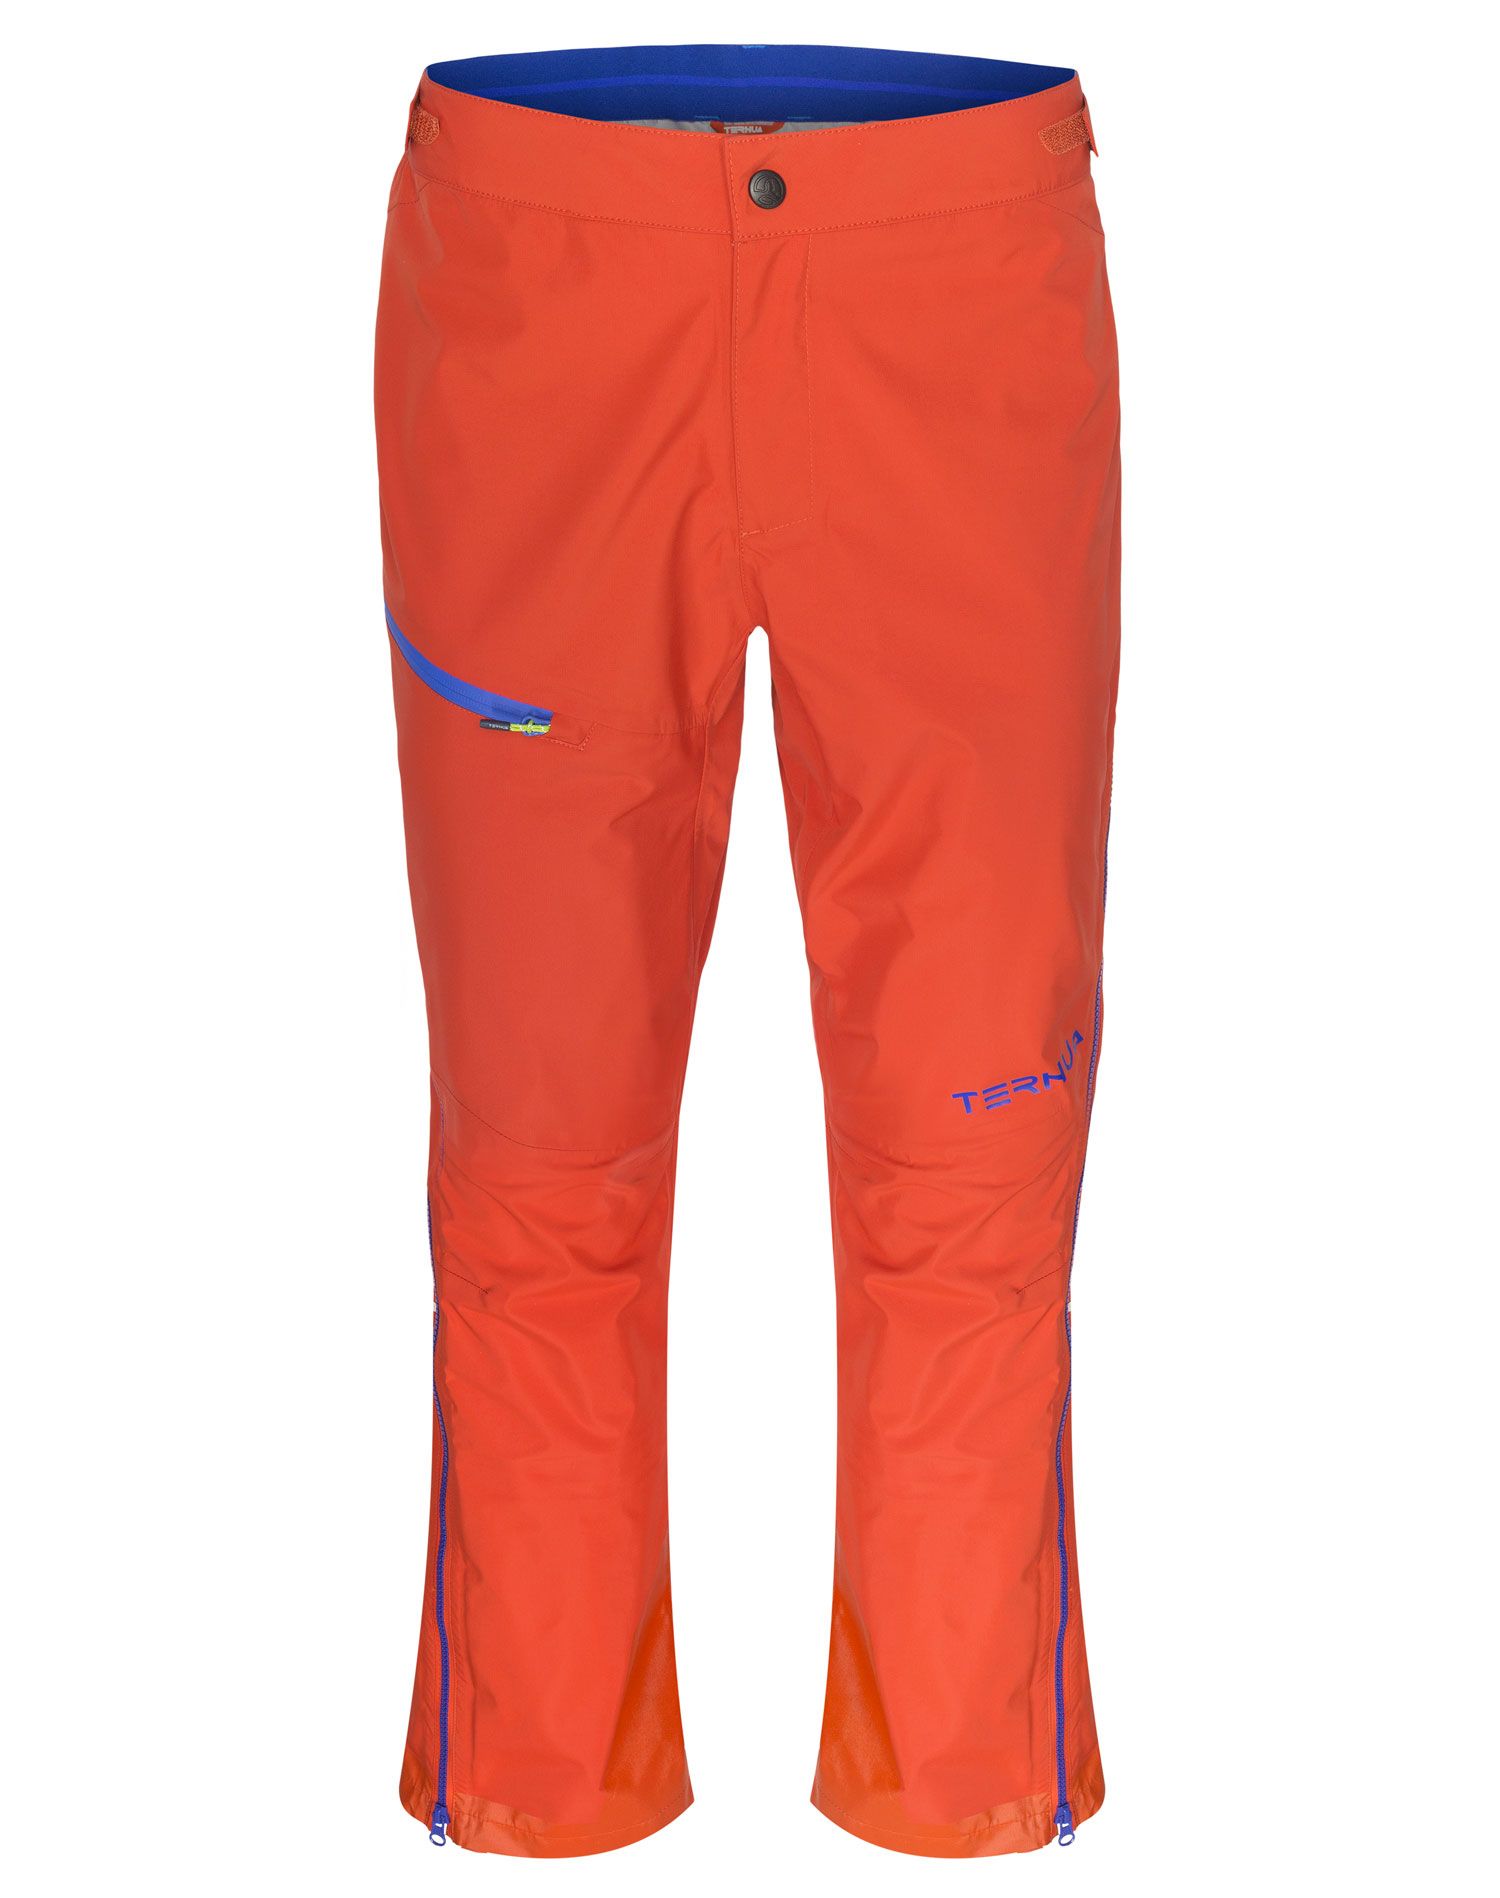 Ternua - Trivor Pant - Mountaineering trousers - Men's